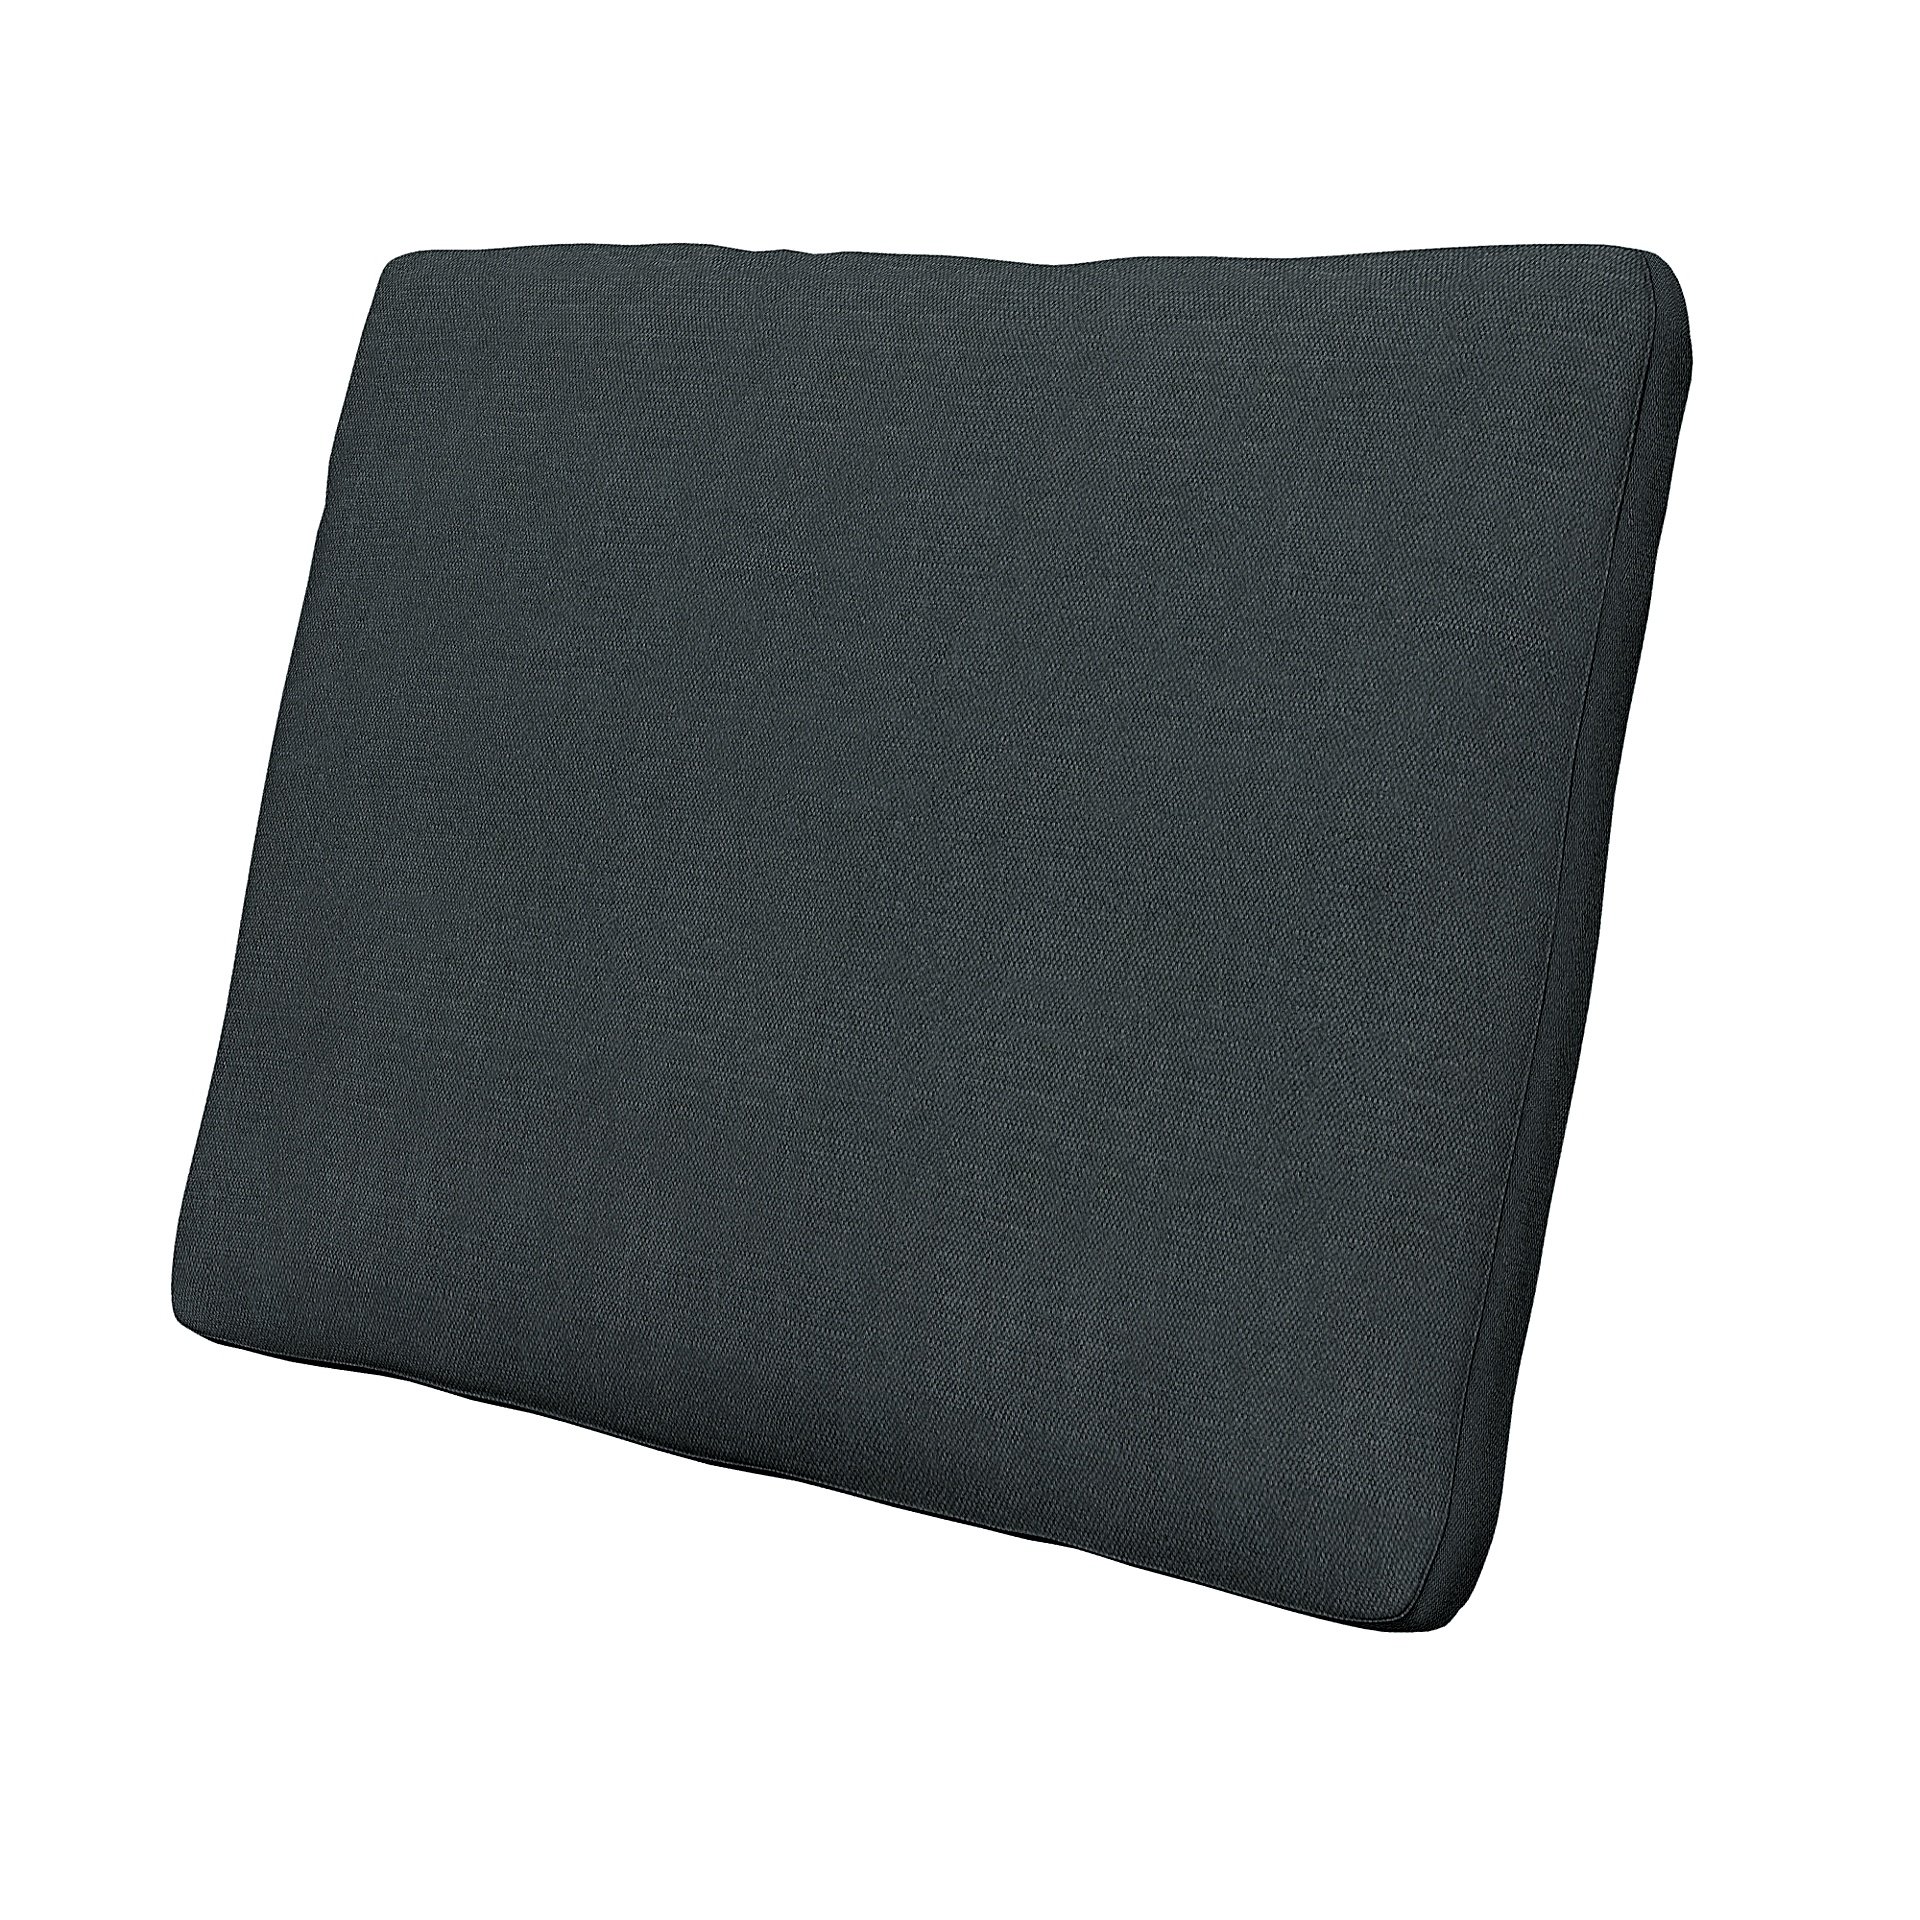 IKEA - Cushion Cover Karlstad 58x48x5 cm, Graphite Grey, Linen - Bemz